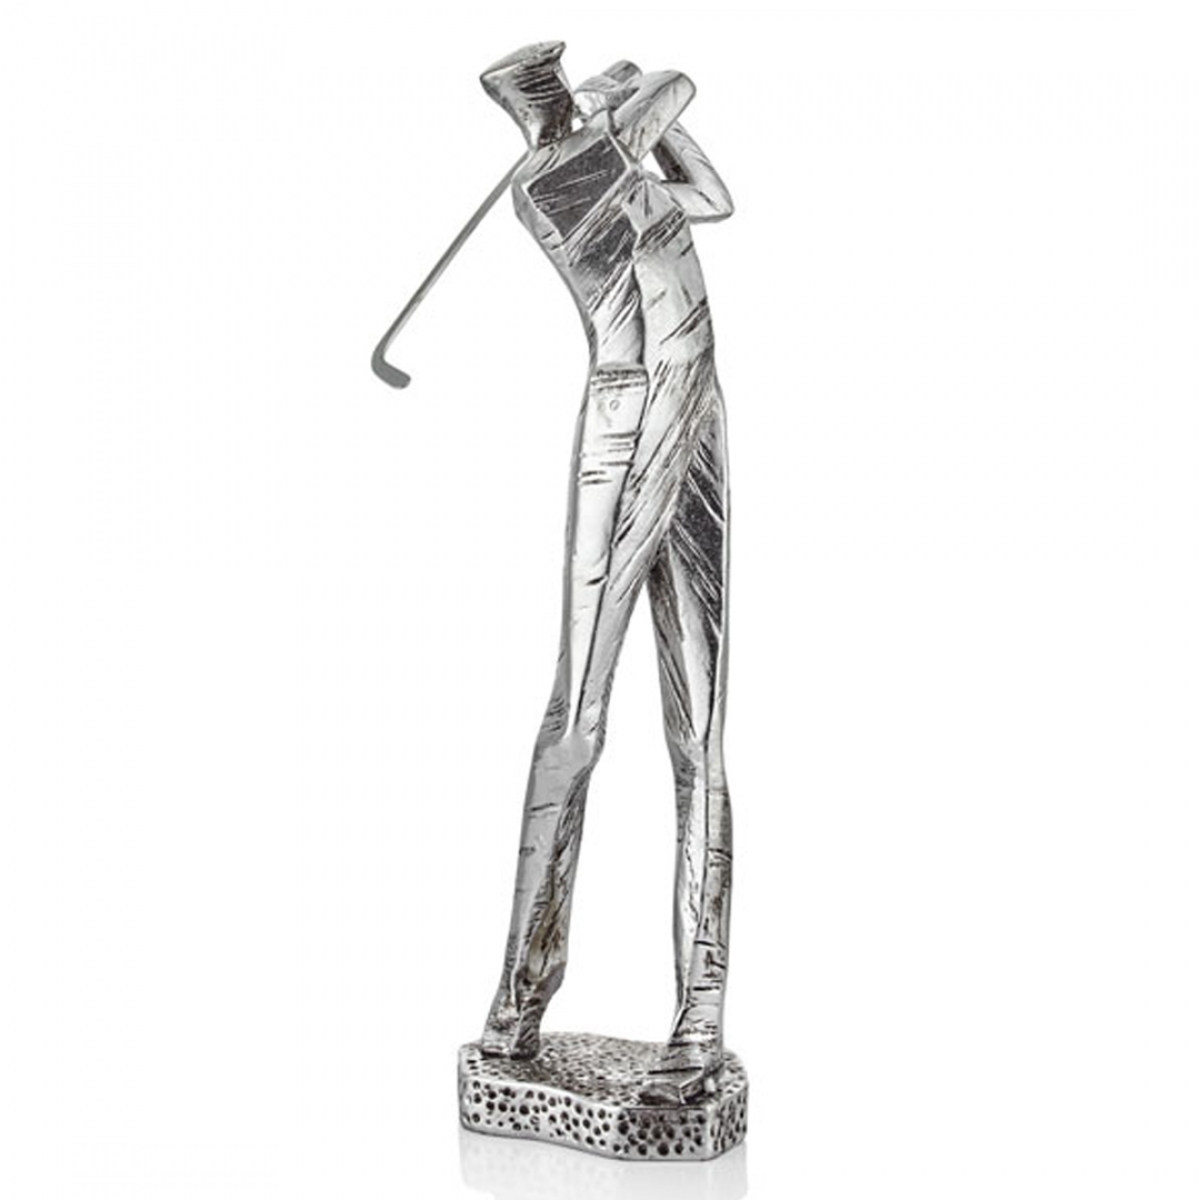 Golf Oyuncusu Dekoratif Obje 14x15x37 cm